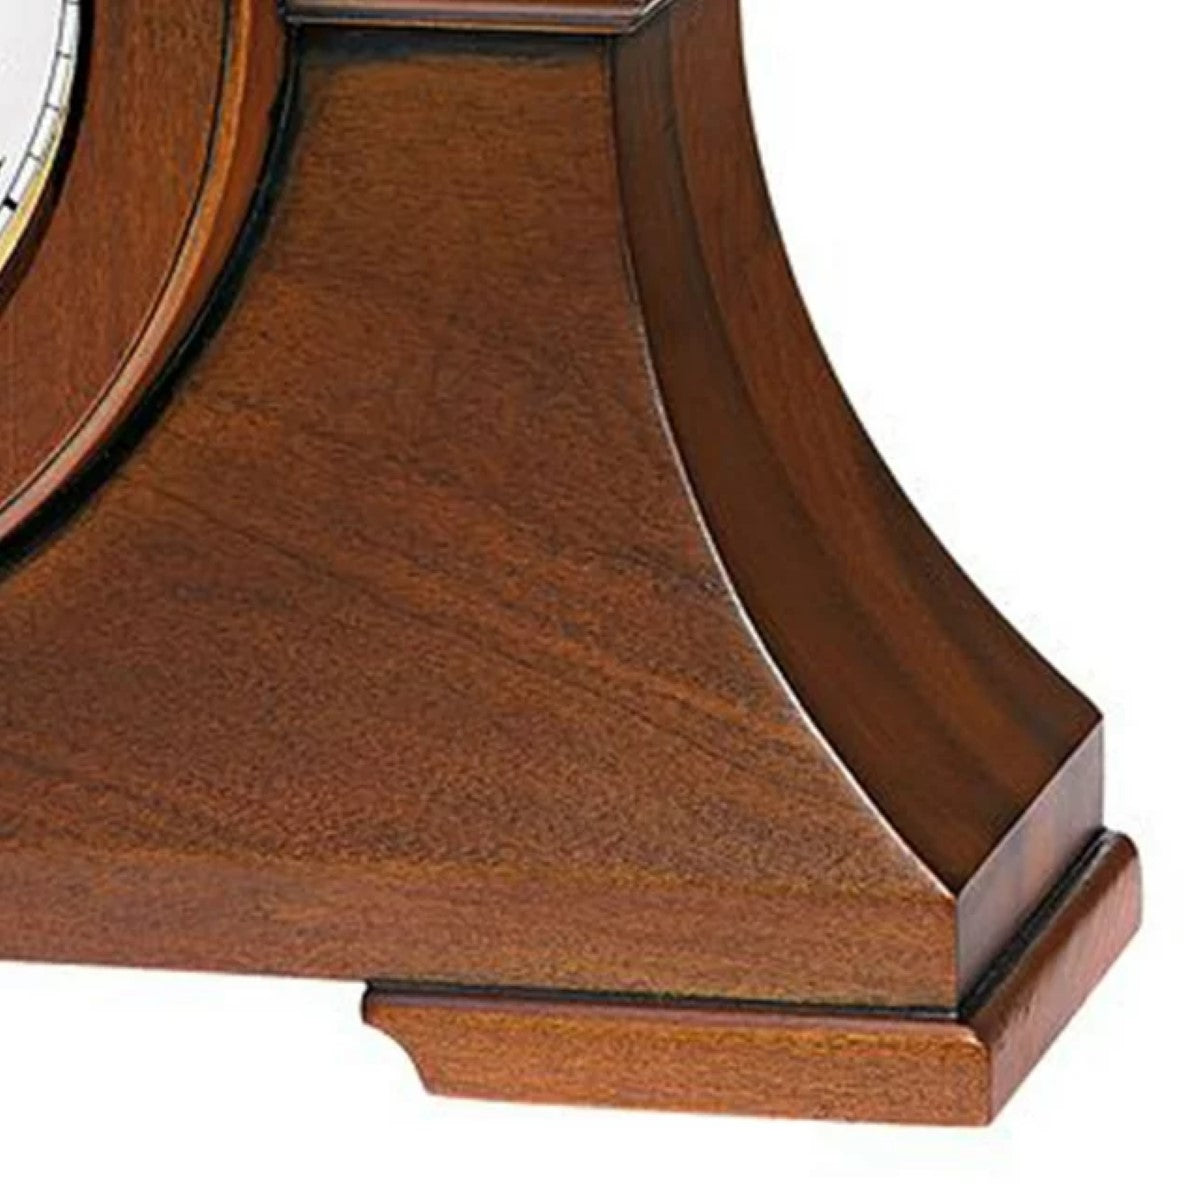 Bulova B1765 Cambria Walnut Chiming Mantel Clock (Open Box)